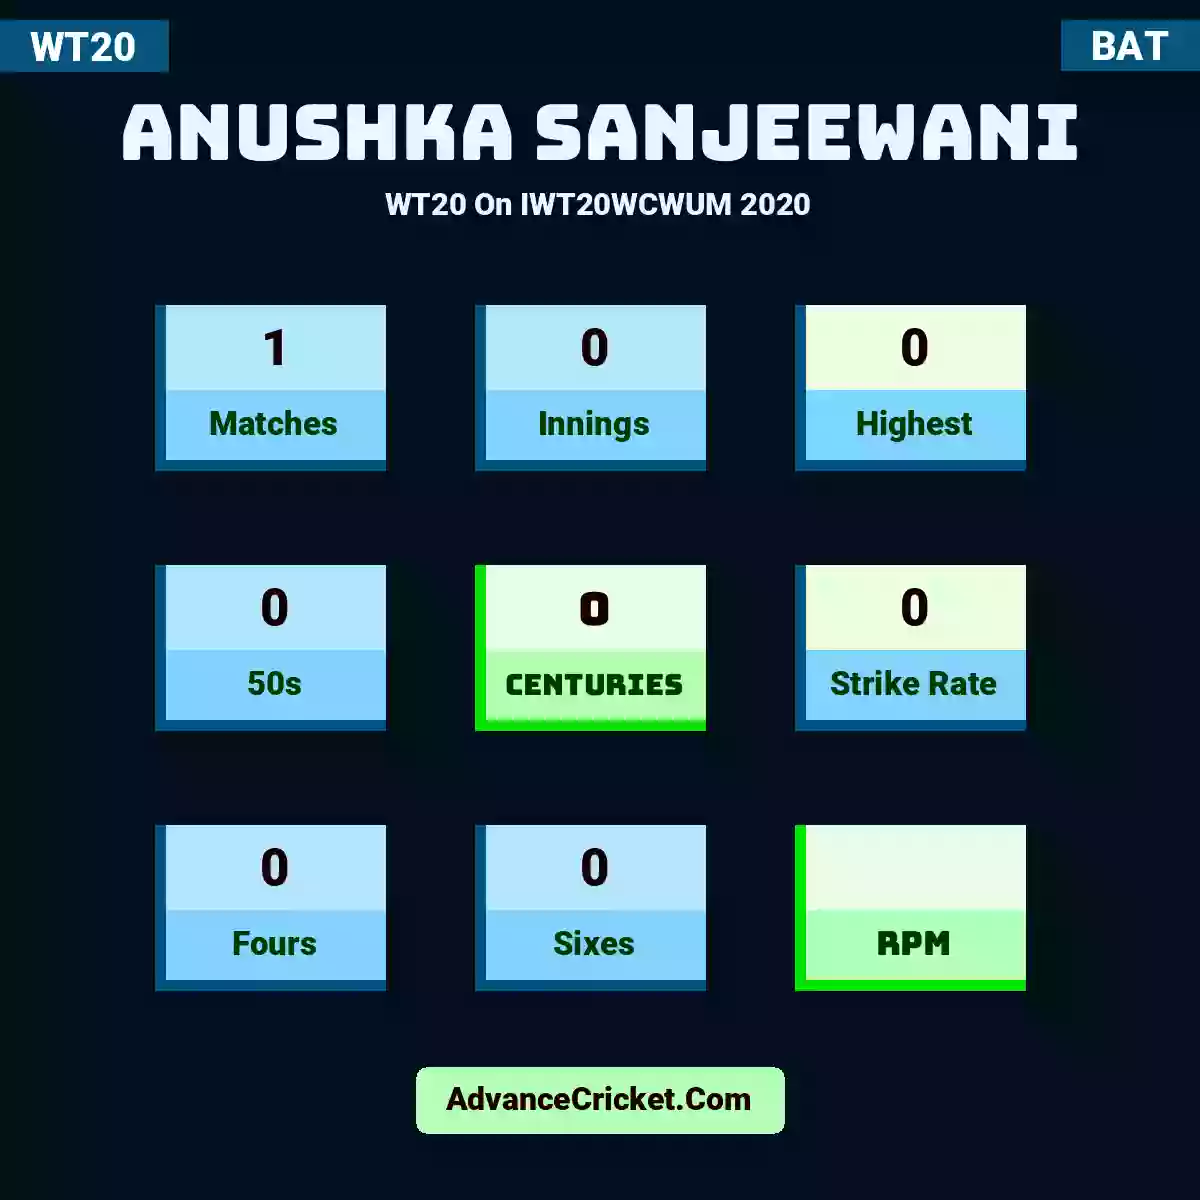 Anushka Sanjeewani WT20  On IWT20WCWUM 2020, Anushka Sanjeewani played 1 matches, scored 0 runs as highest, 0 half-centuries, and 0 centuries, with a strike rate of 0. A.Sanjeewani hit 0 fours and 0 sixes.